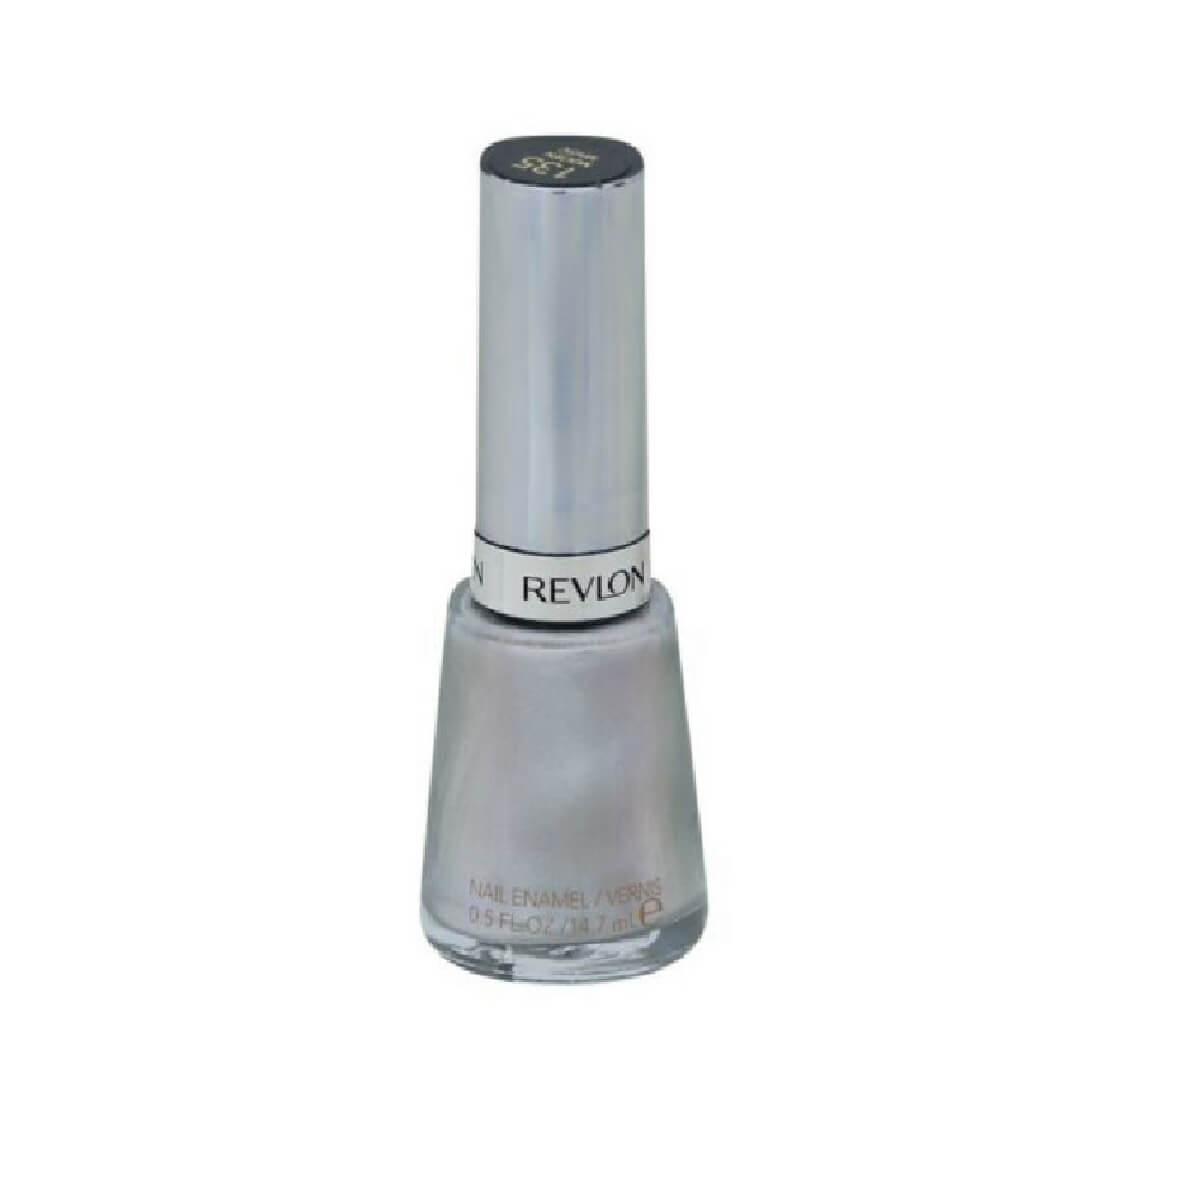 Nail Enamel - Fade Resistant Nail Polish Color - Revlon